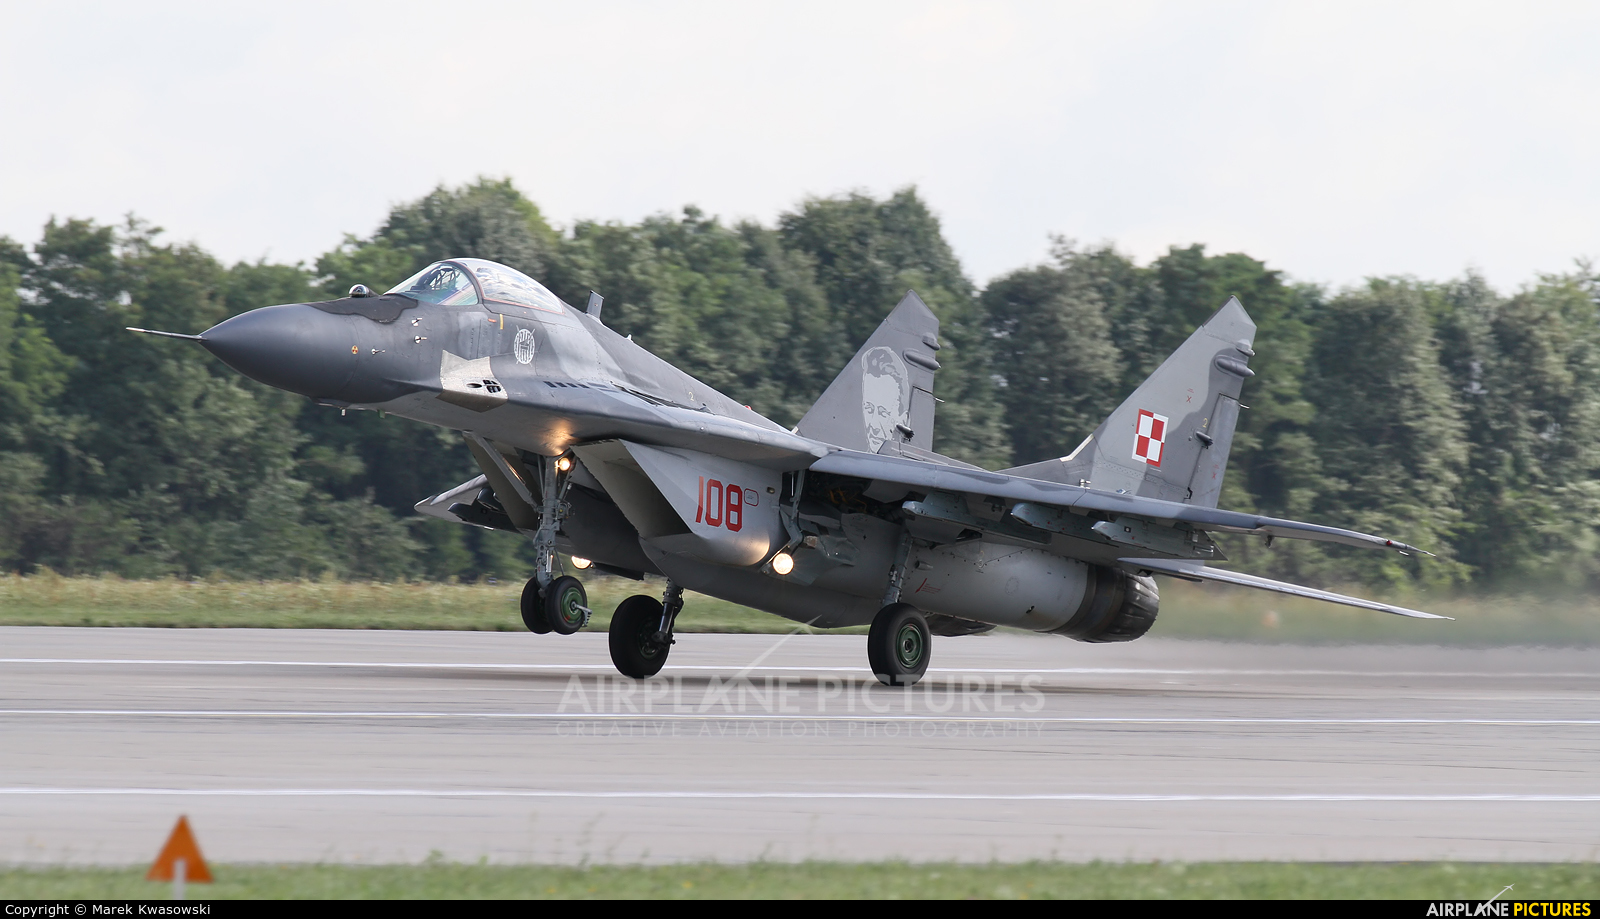 Poland - Air Force 108 aircraft at Mińsk Mazowiecki